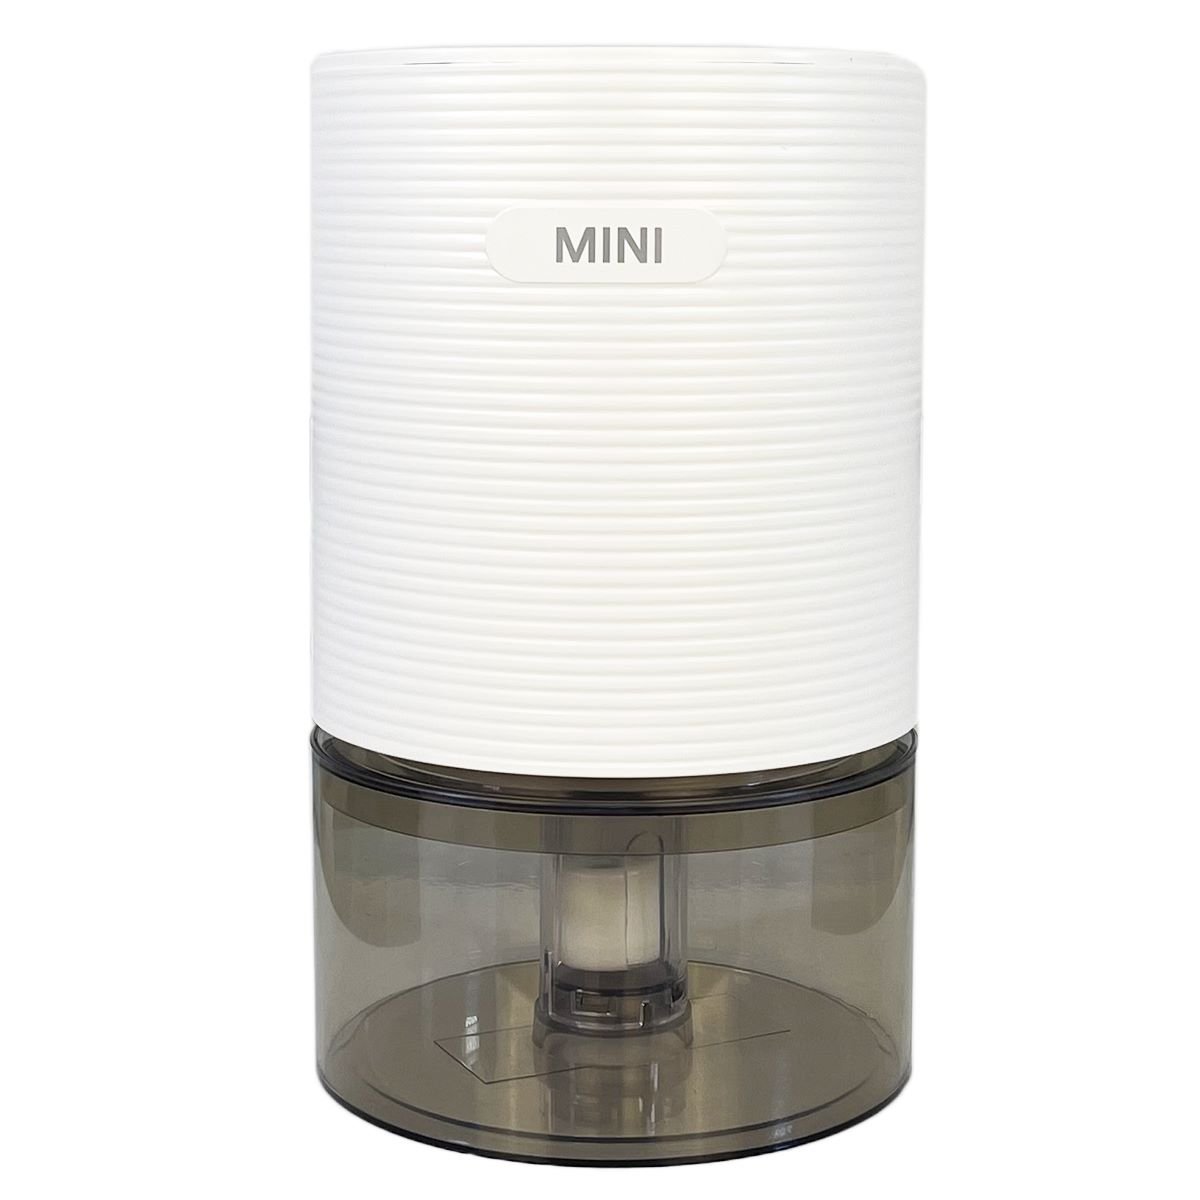 Desumidificador de Ar Desidrat Mini - 750ml - Bivolt Desidrat Home & Health